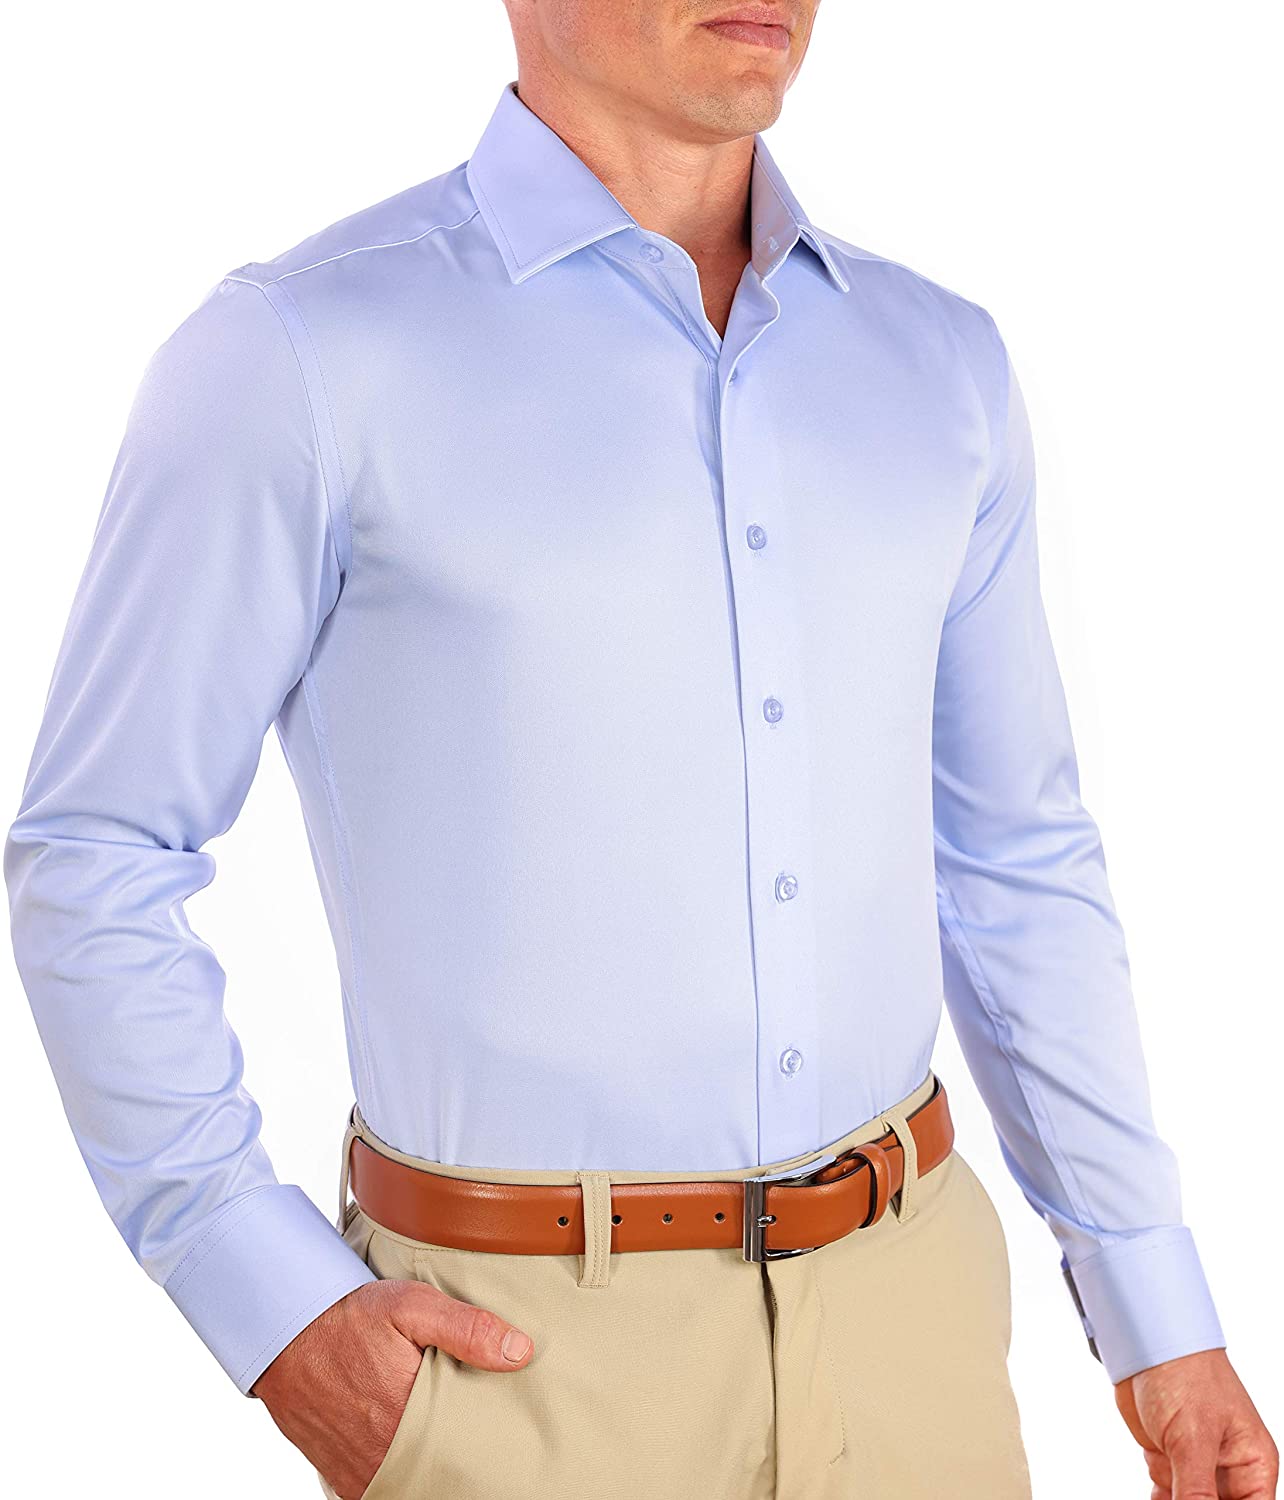 Oxidize oasis Gain control CC Performance Stretch Slim Fit Dress Shirts for Men | Wrinkle Resistant  Long Sl | eBay